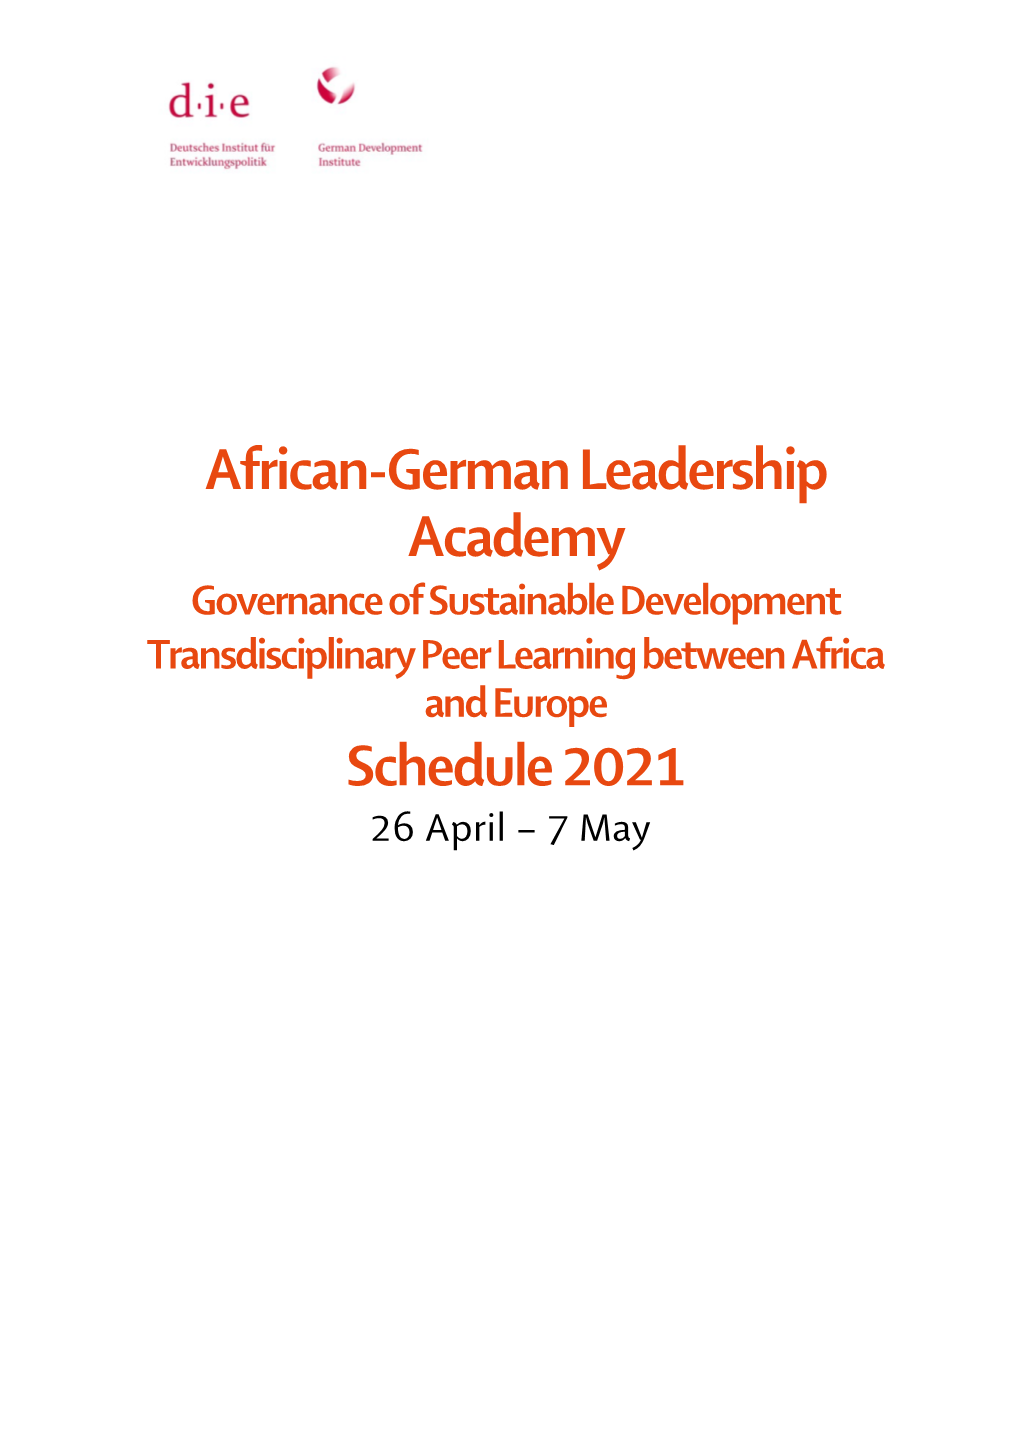 Programme “African-German Leadership Academy 2021”